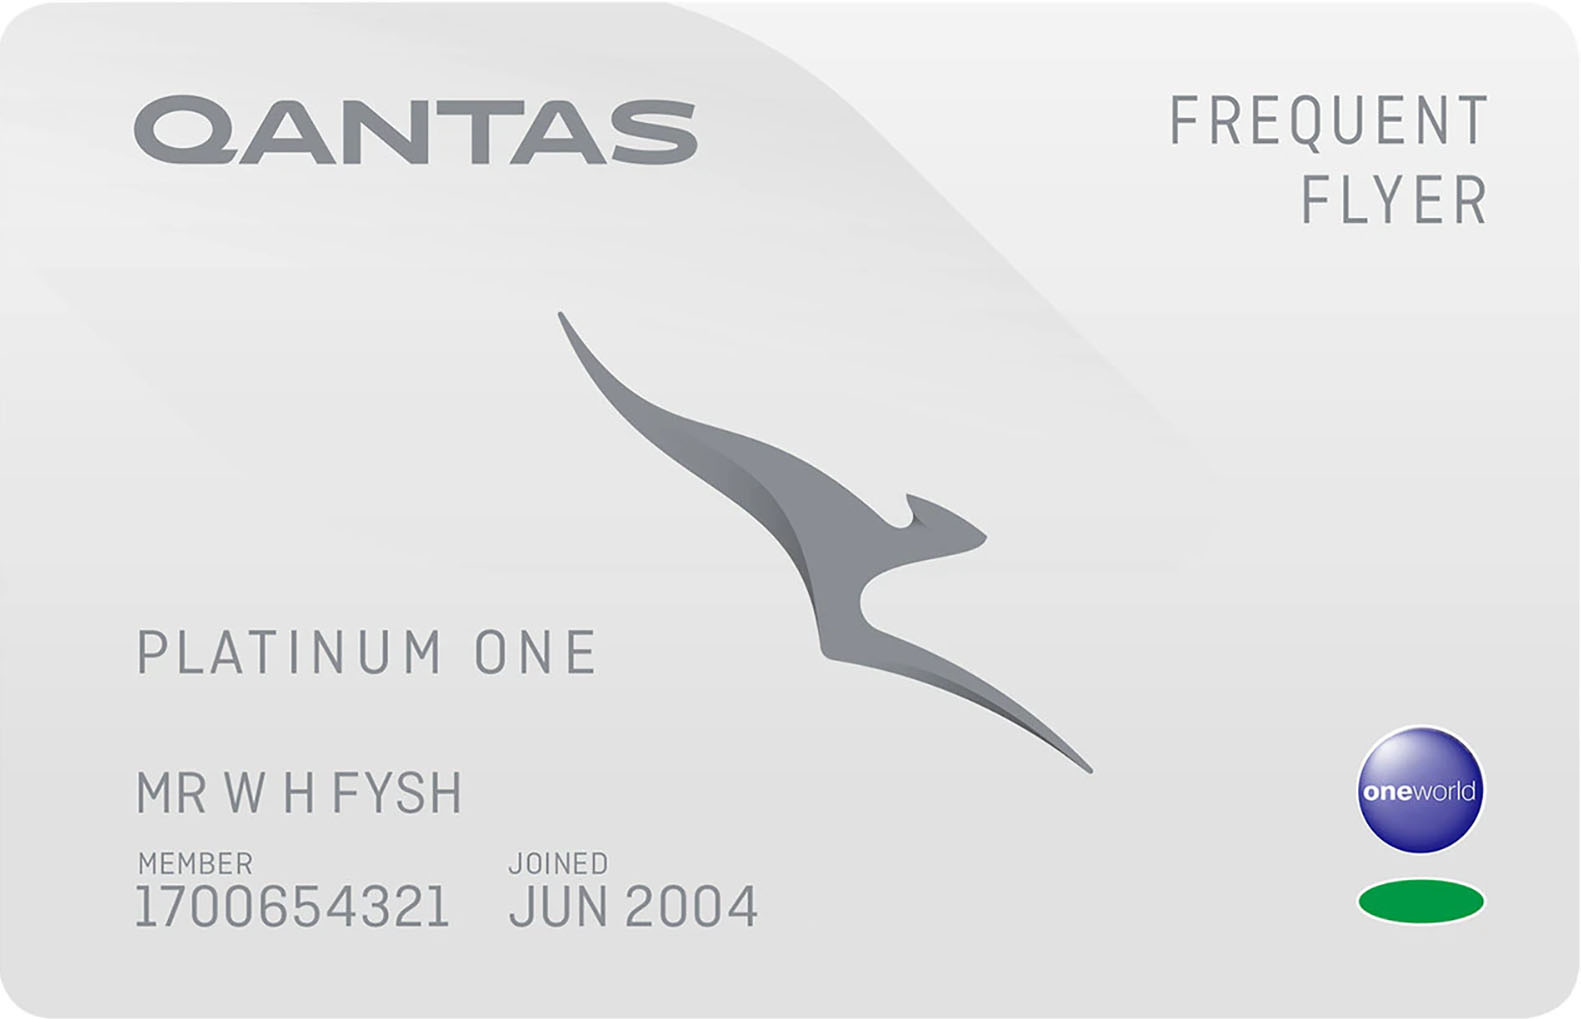 Qantas Platinum One frequent flyer membership card